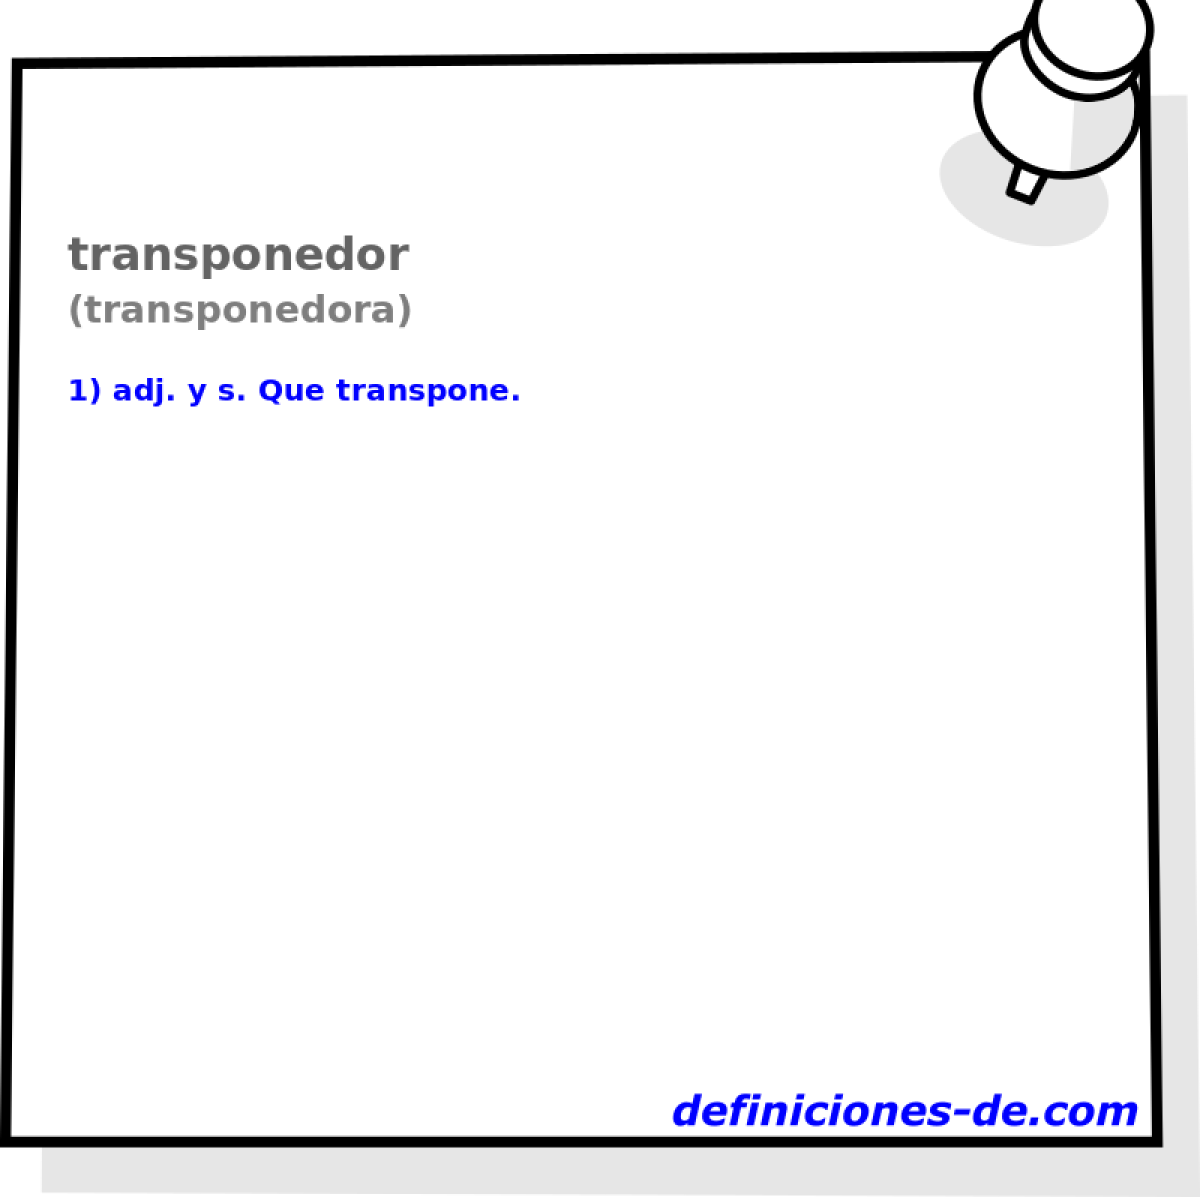 transponedor (transponedora)